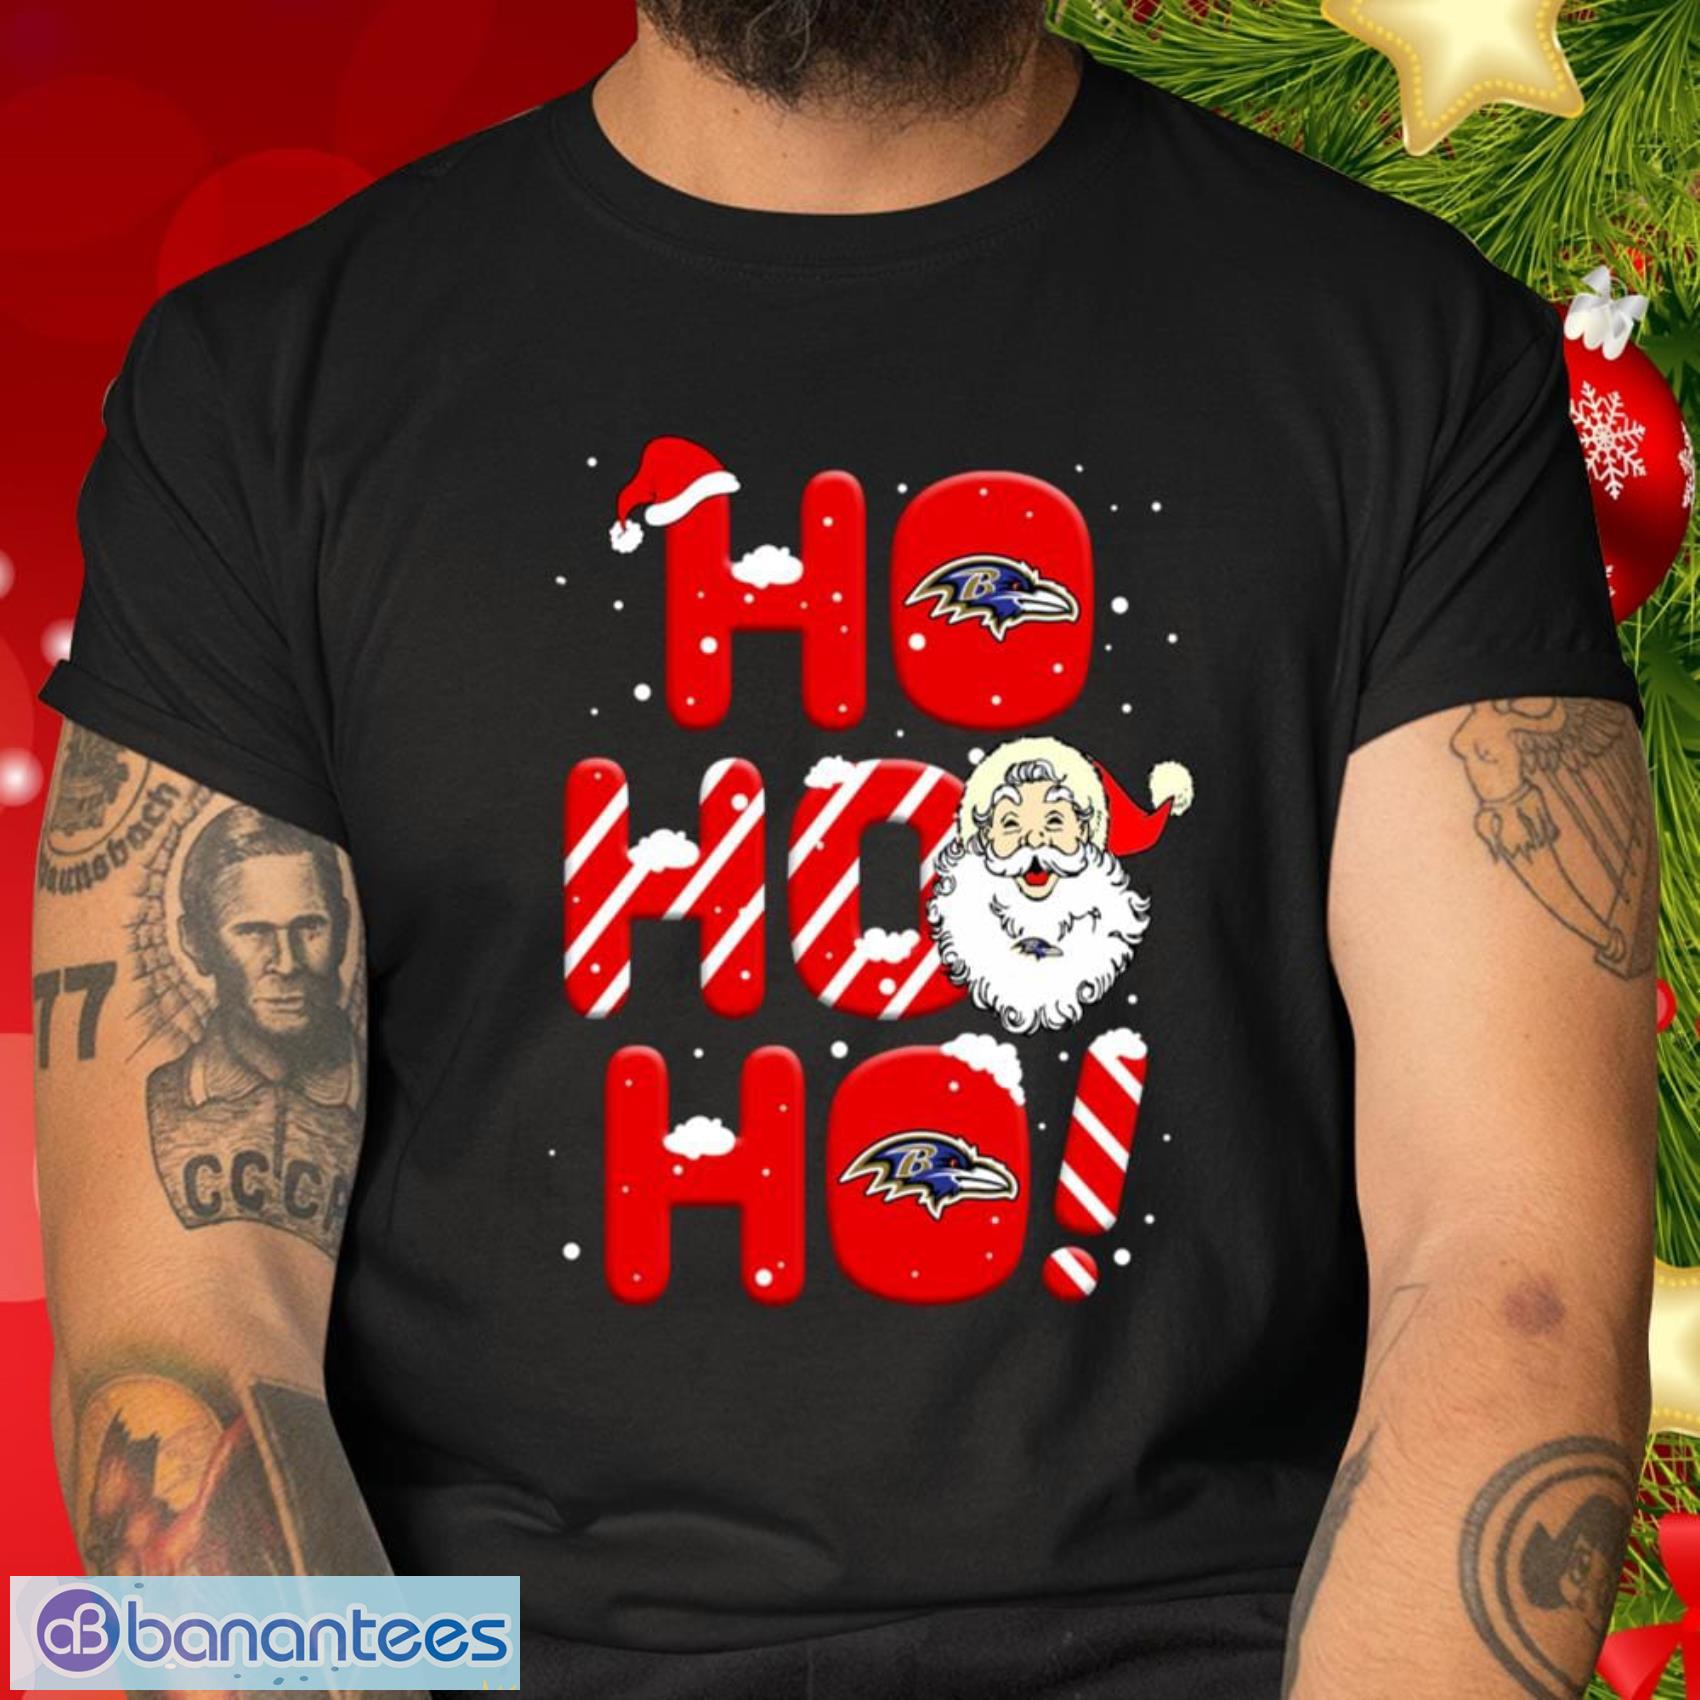 Baltimore Ravens NFL Football Gift Fr Fans Ho Ho Ho Santa Claus Merry Christmas Shirt T Shirt - Baltimore Ravens NFL Football Ho Ho Ho Santa Claus Merry Christmas Shirt T Shirt_1